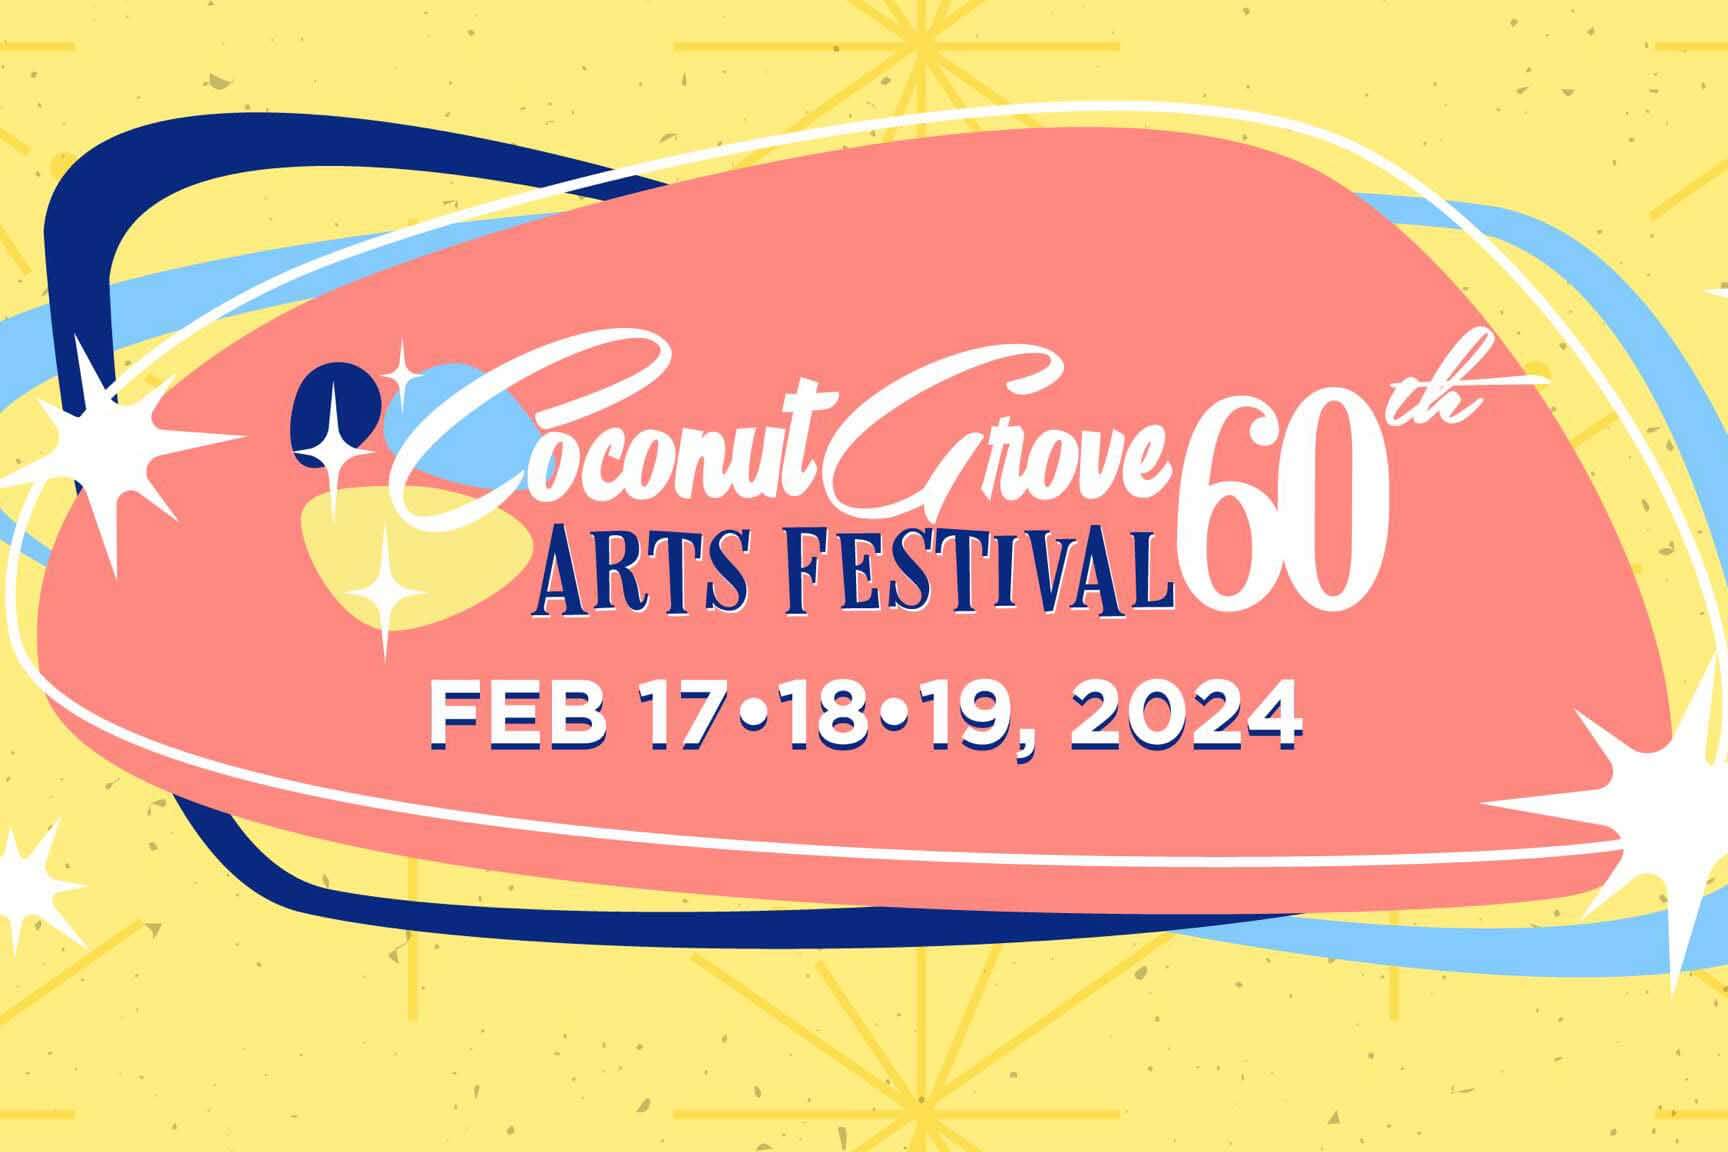 Coconut Grove Art Festival promotional flyer